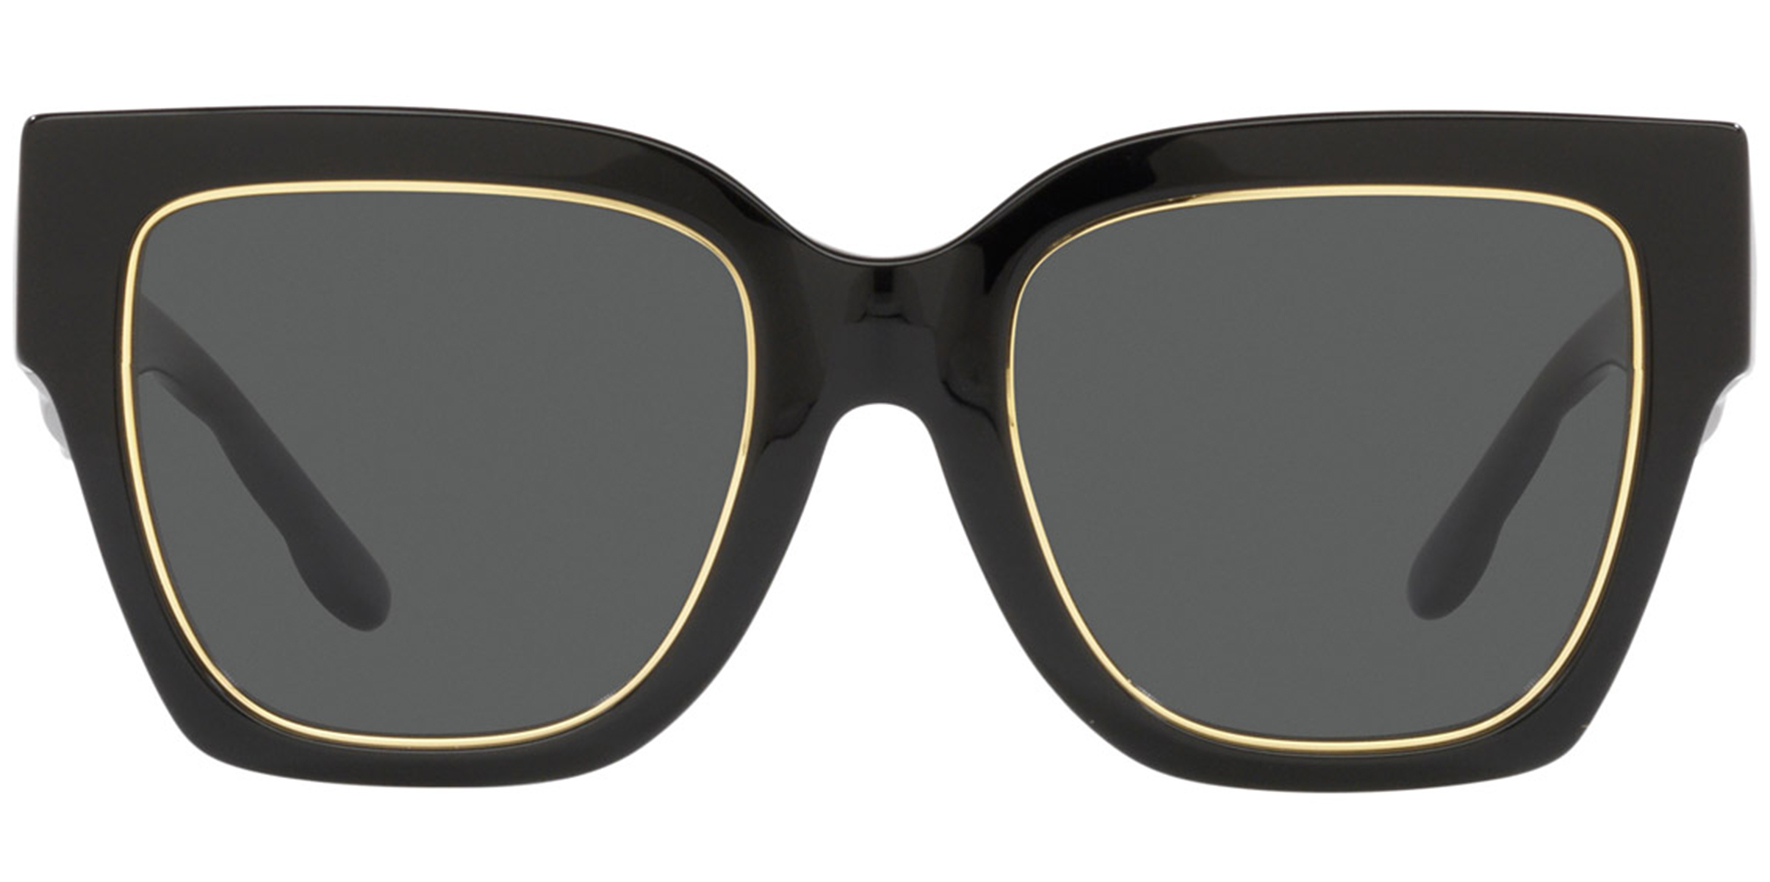 Oversized square-frame acetate and gold-tone sunglasses